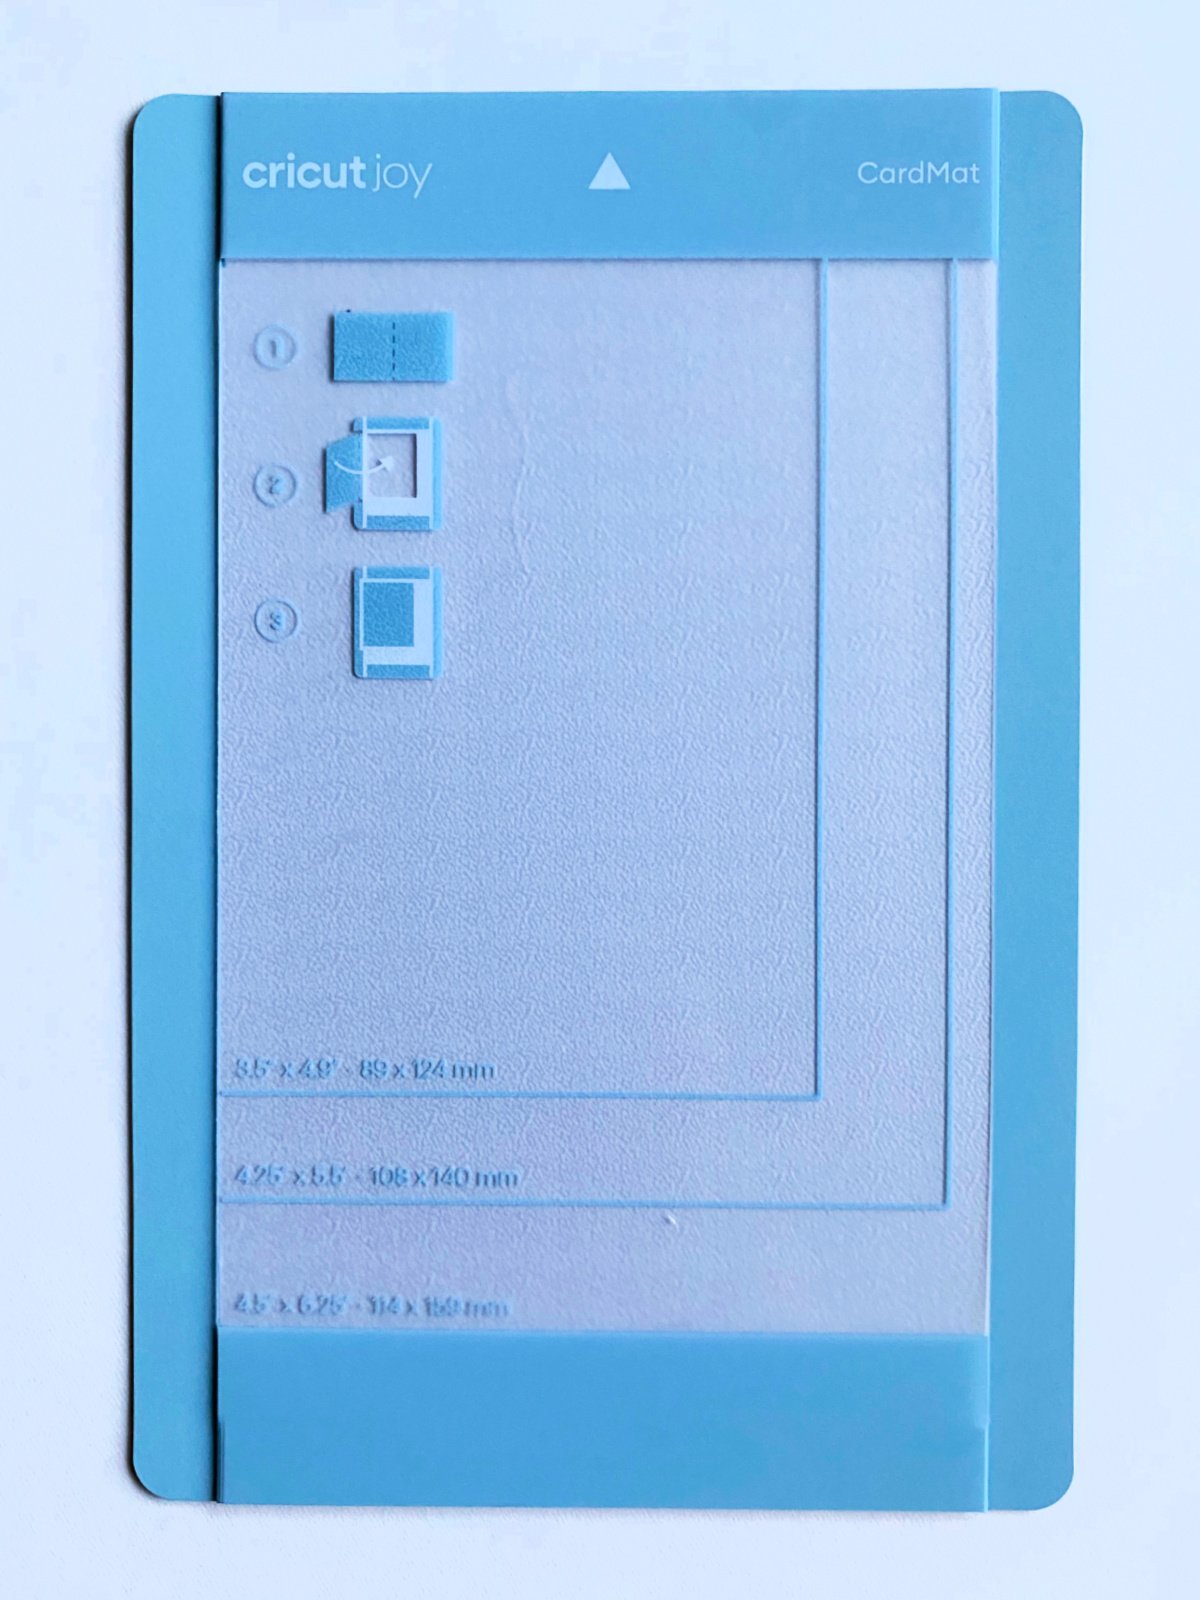 Small light blue Cricut Joy CardMat on a white surface.